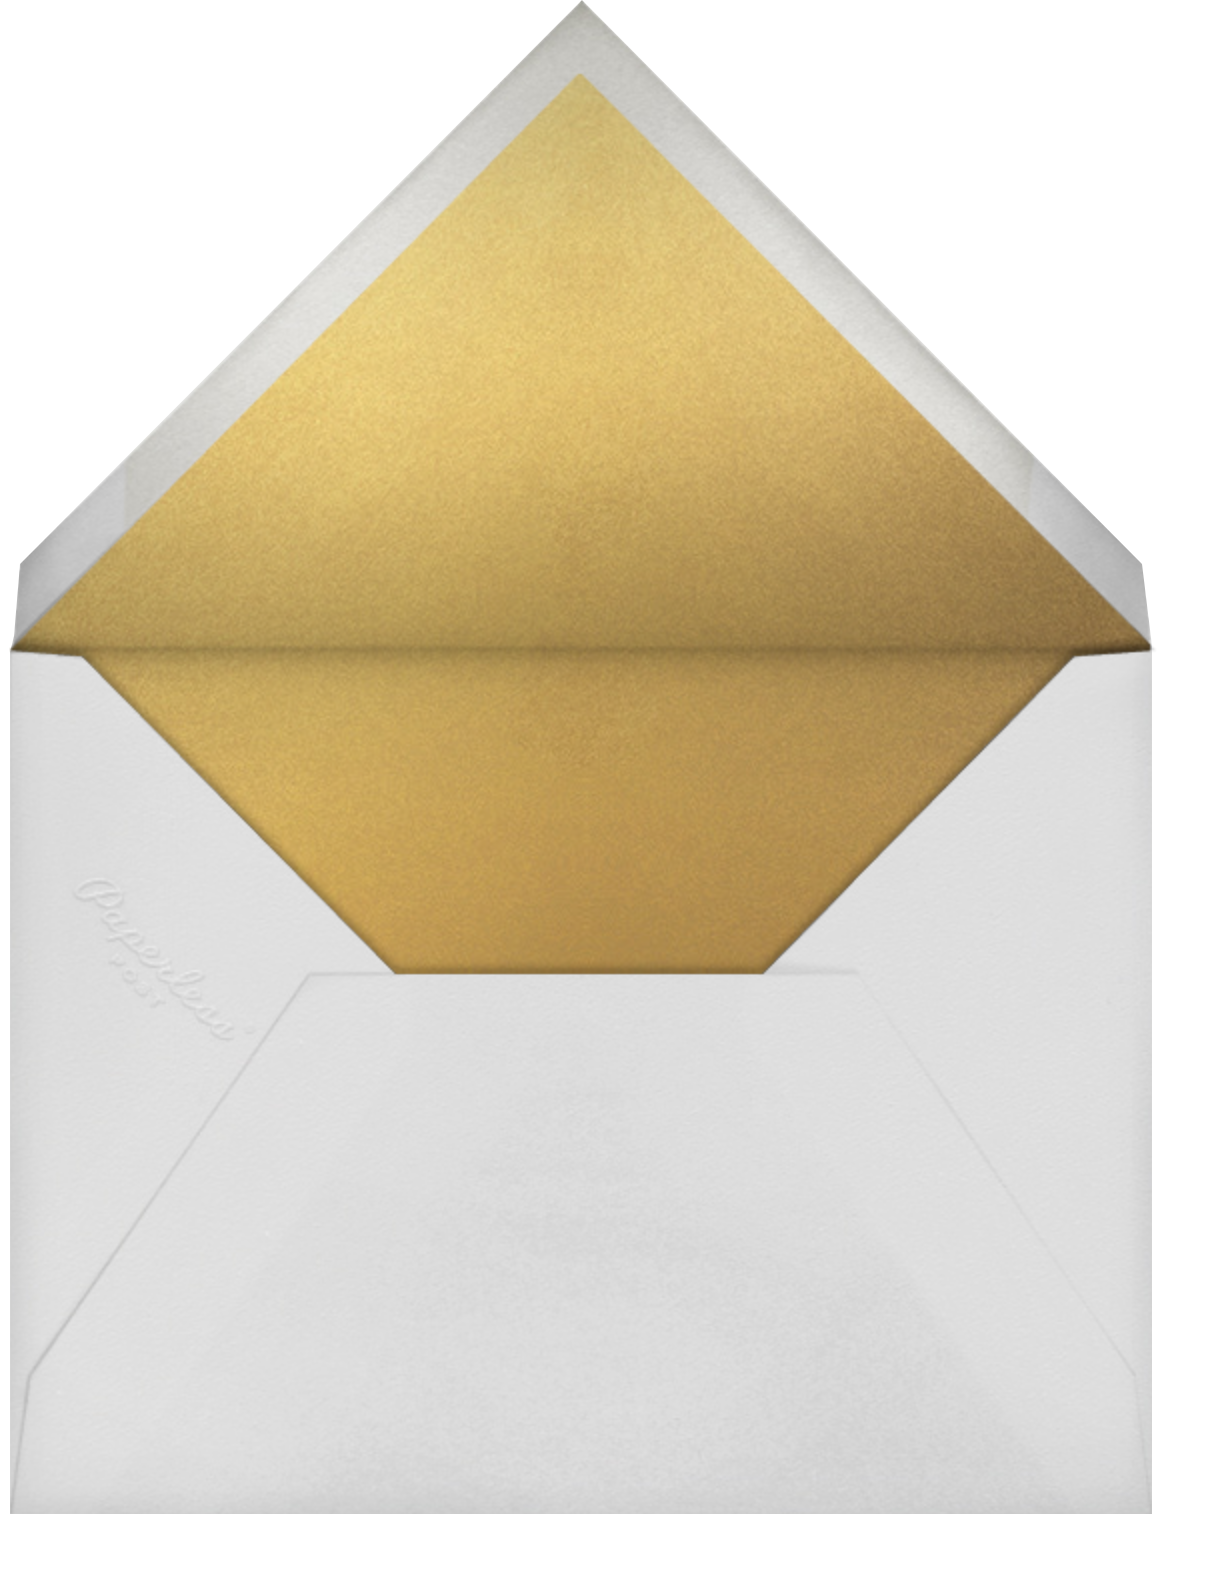 Wreath of Stars - White - Paperless Post - Envelope